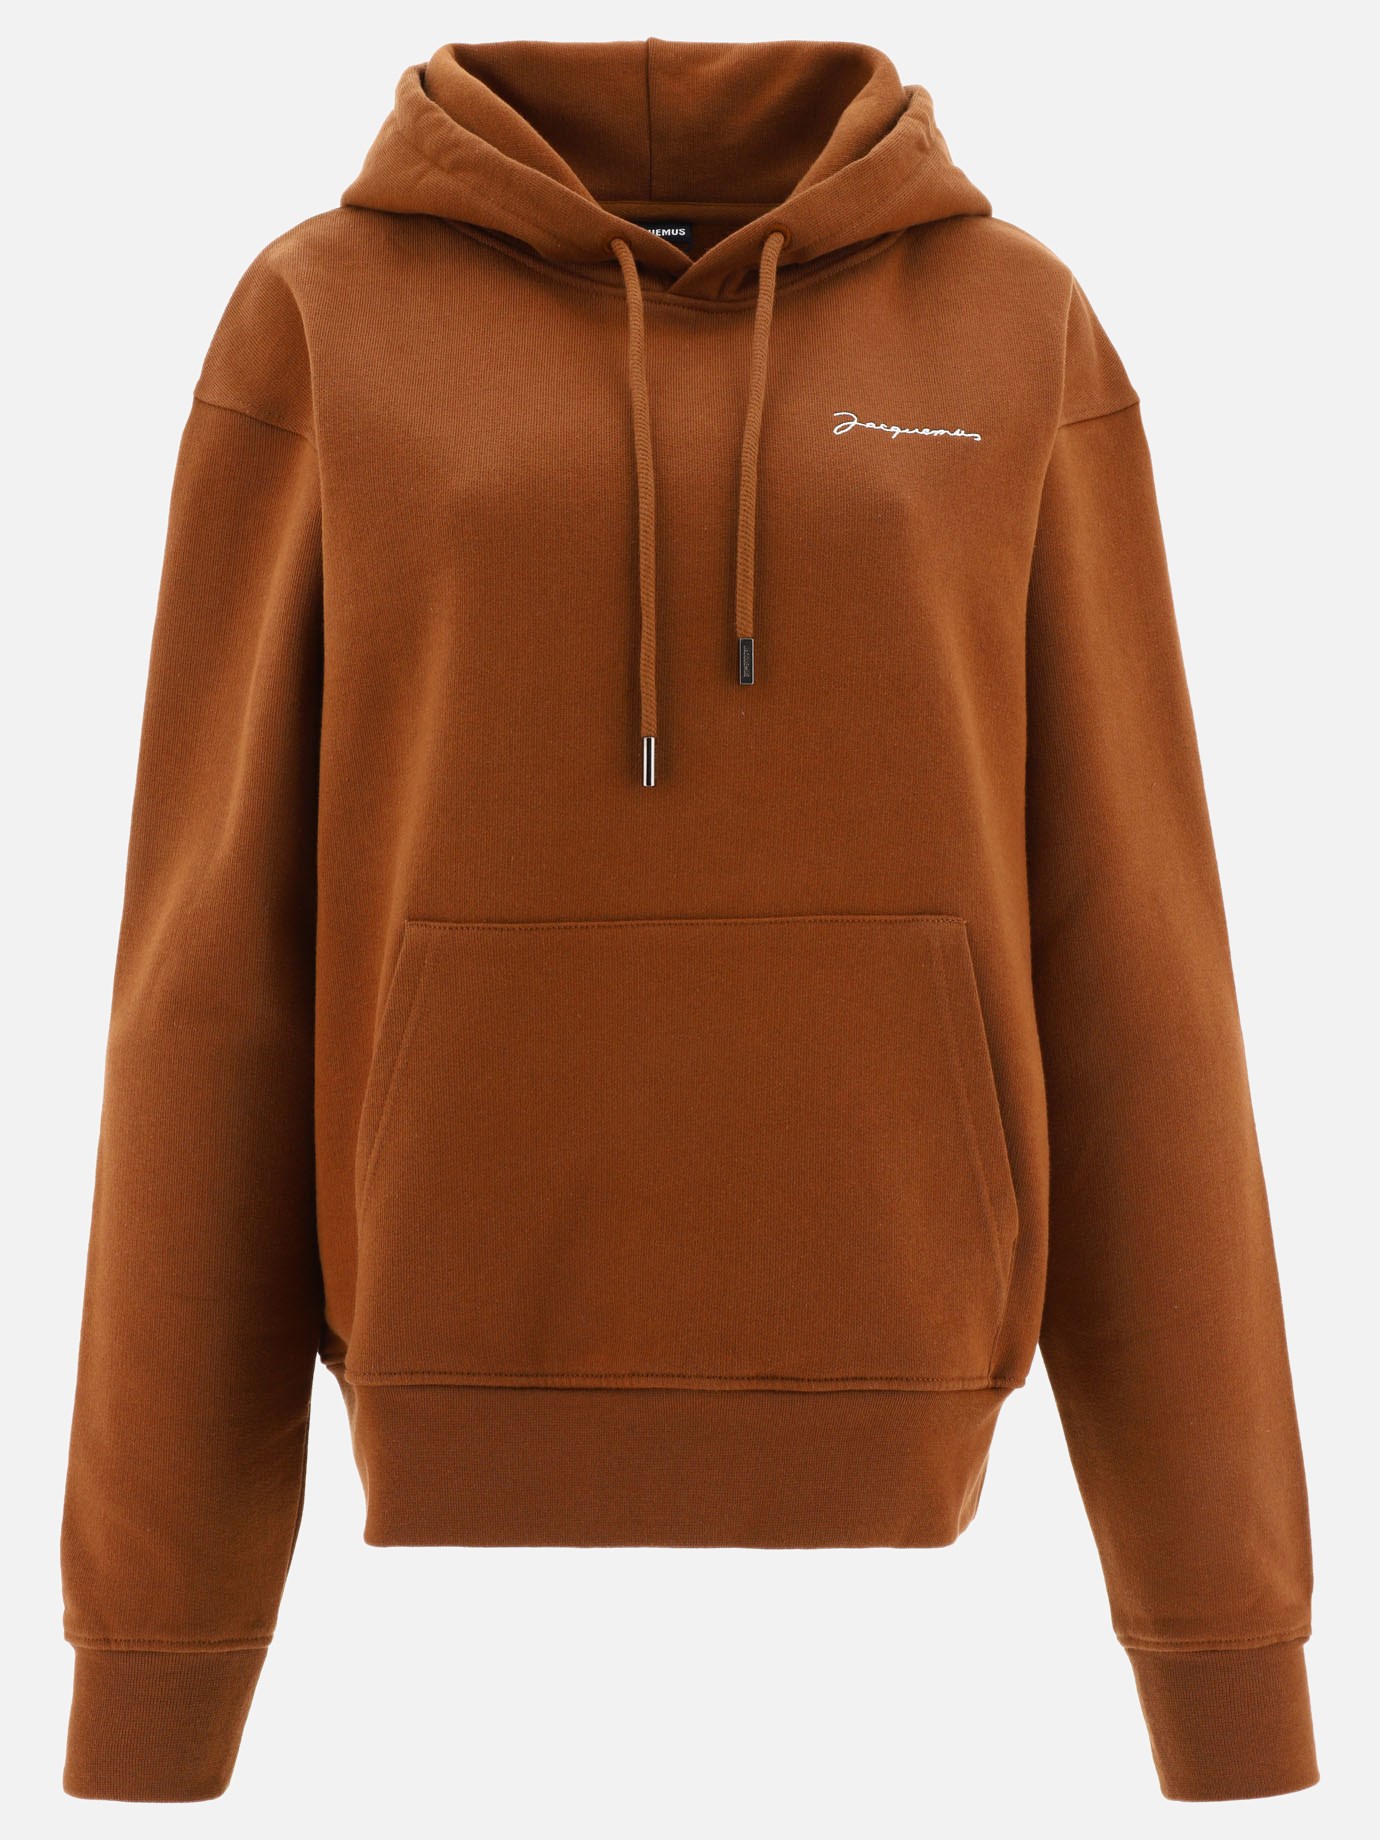  Le Sweatshirt Brodé  hoodieby Jacquemus - 2